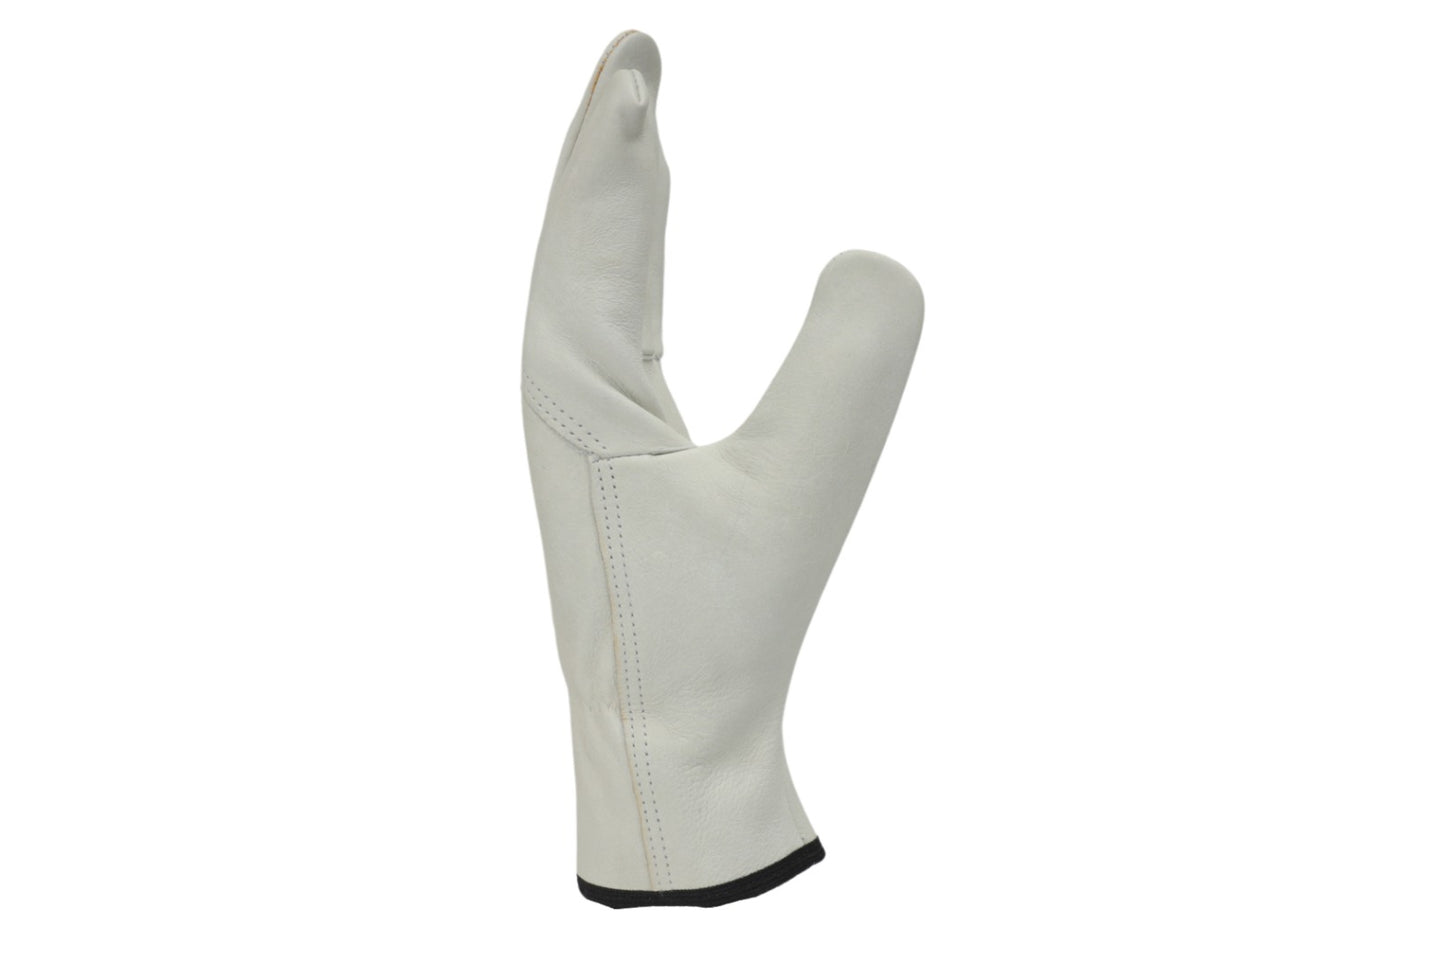 Safety gloves_E223